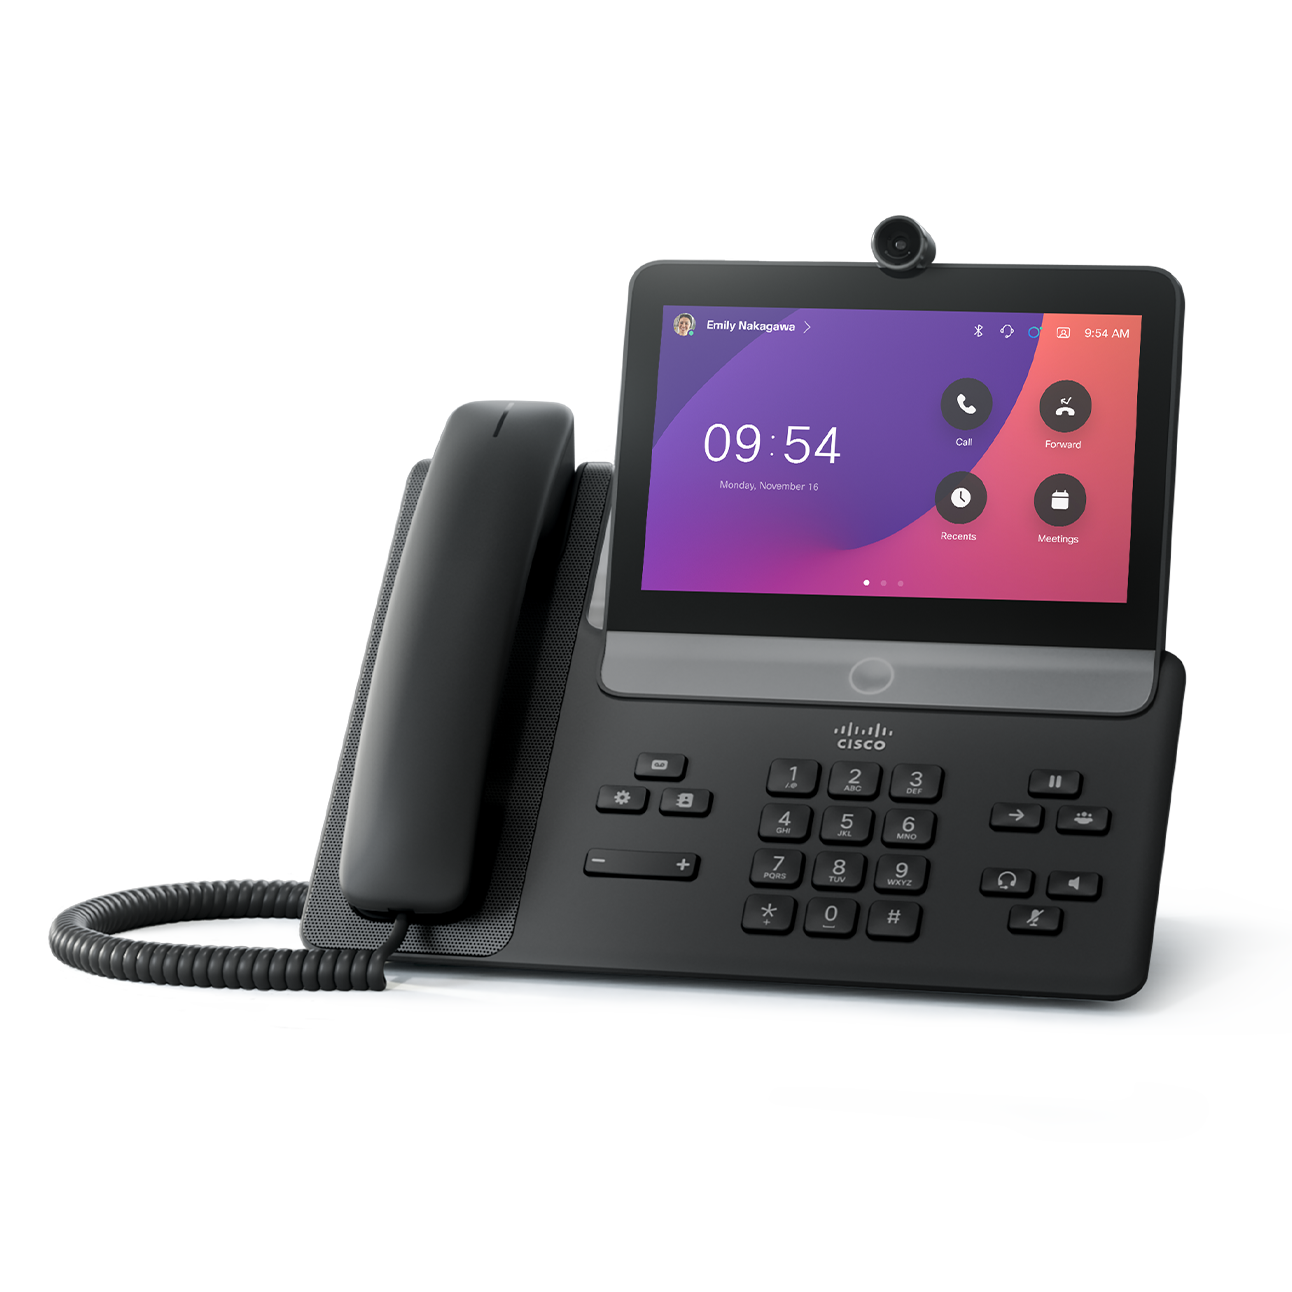 Cisco Video Phone 8875 | The Desk Phone for Hybrid Work